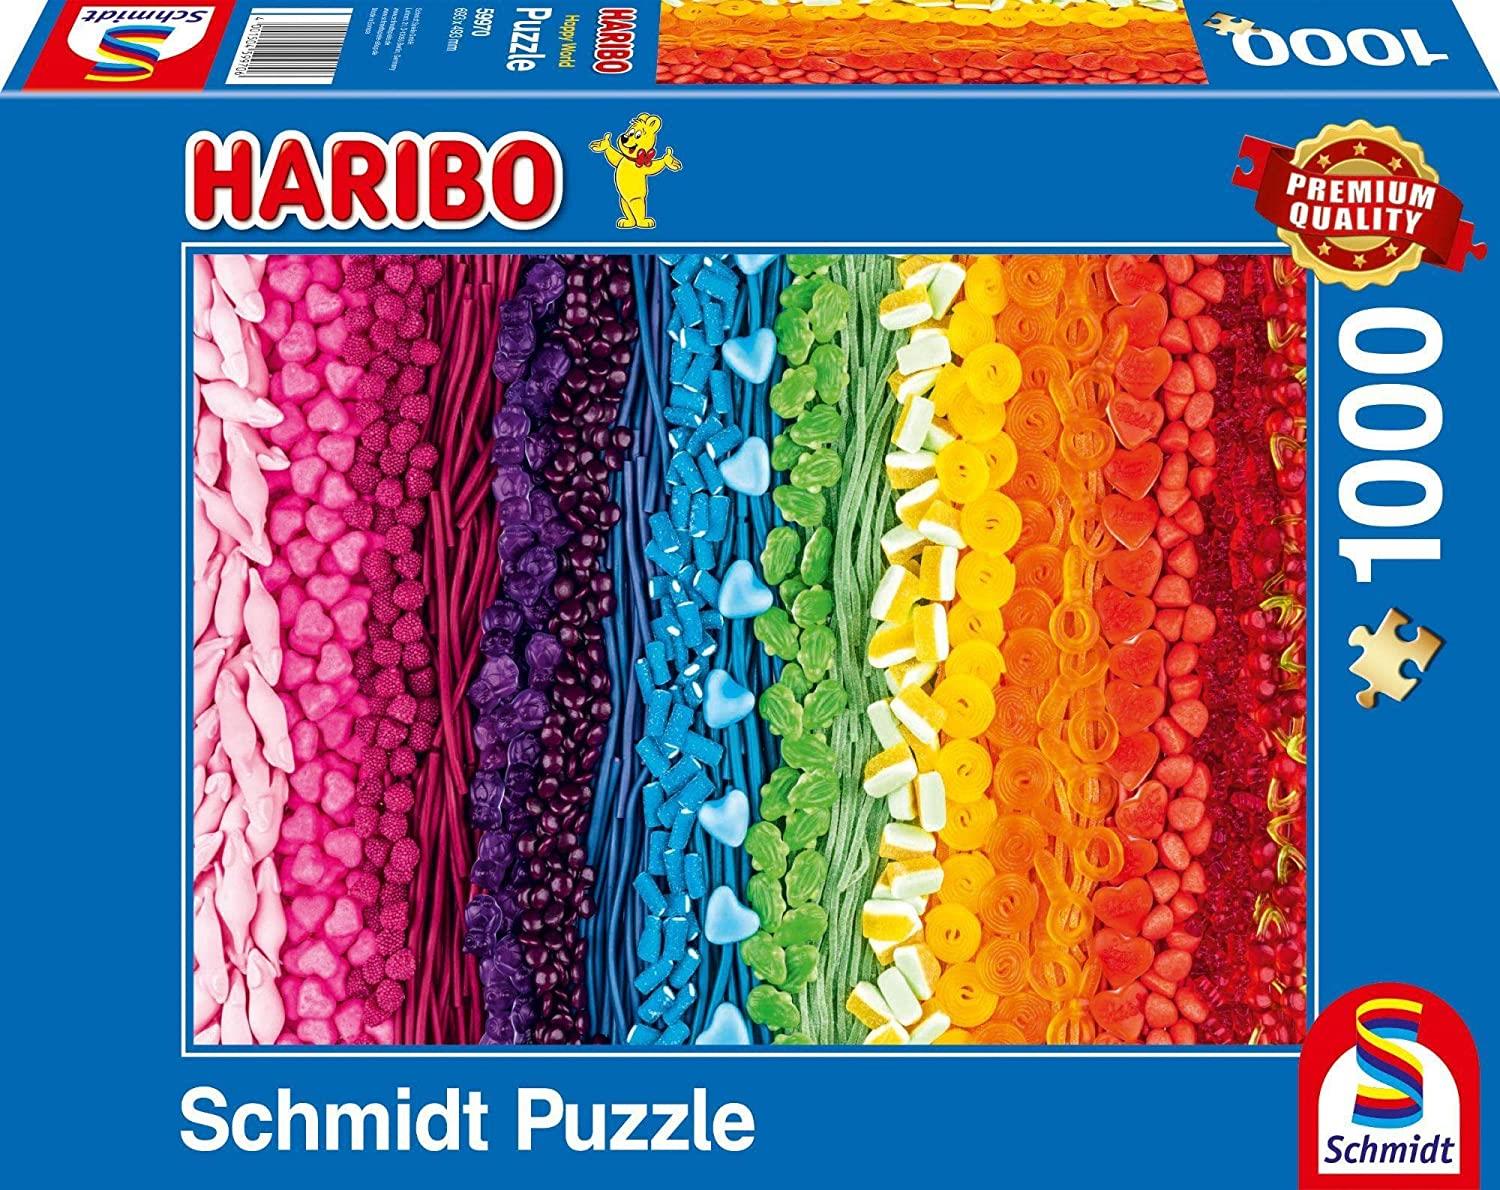 Schmidt Haribo Happy World Jigsaw Puzzle (1000 Pieces)